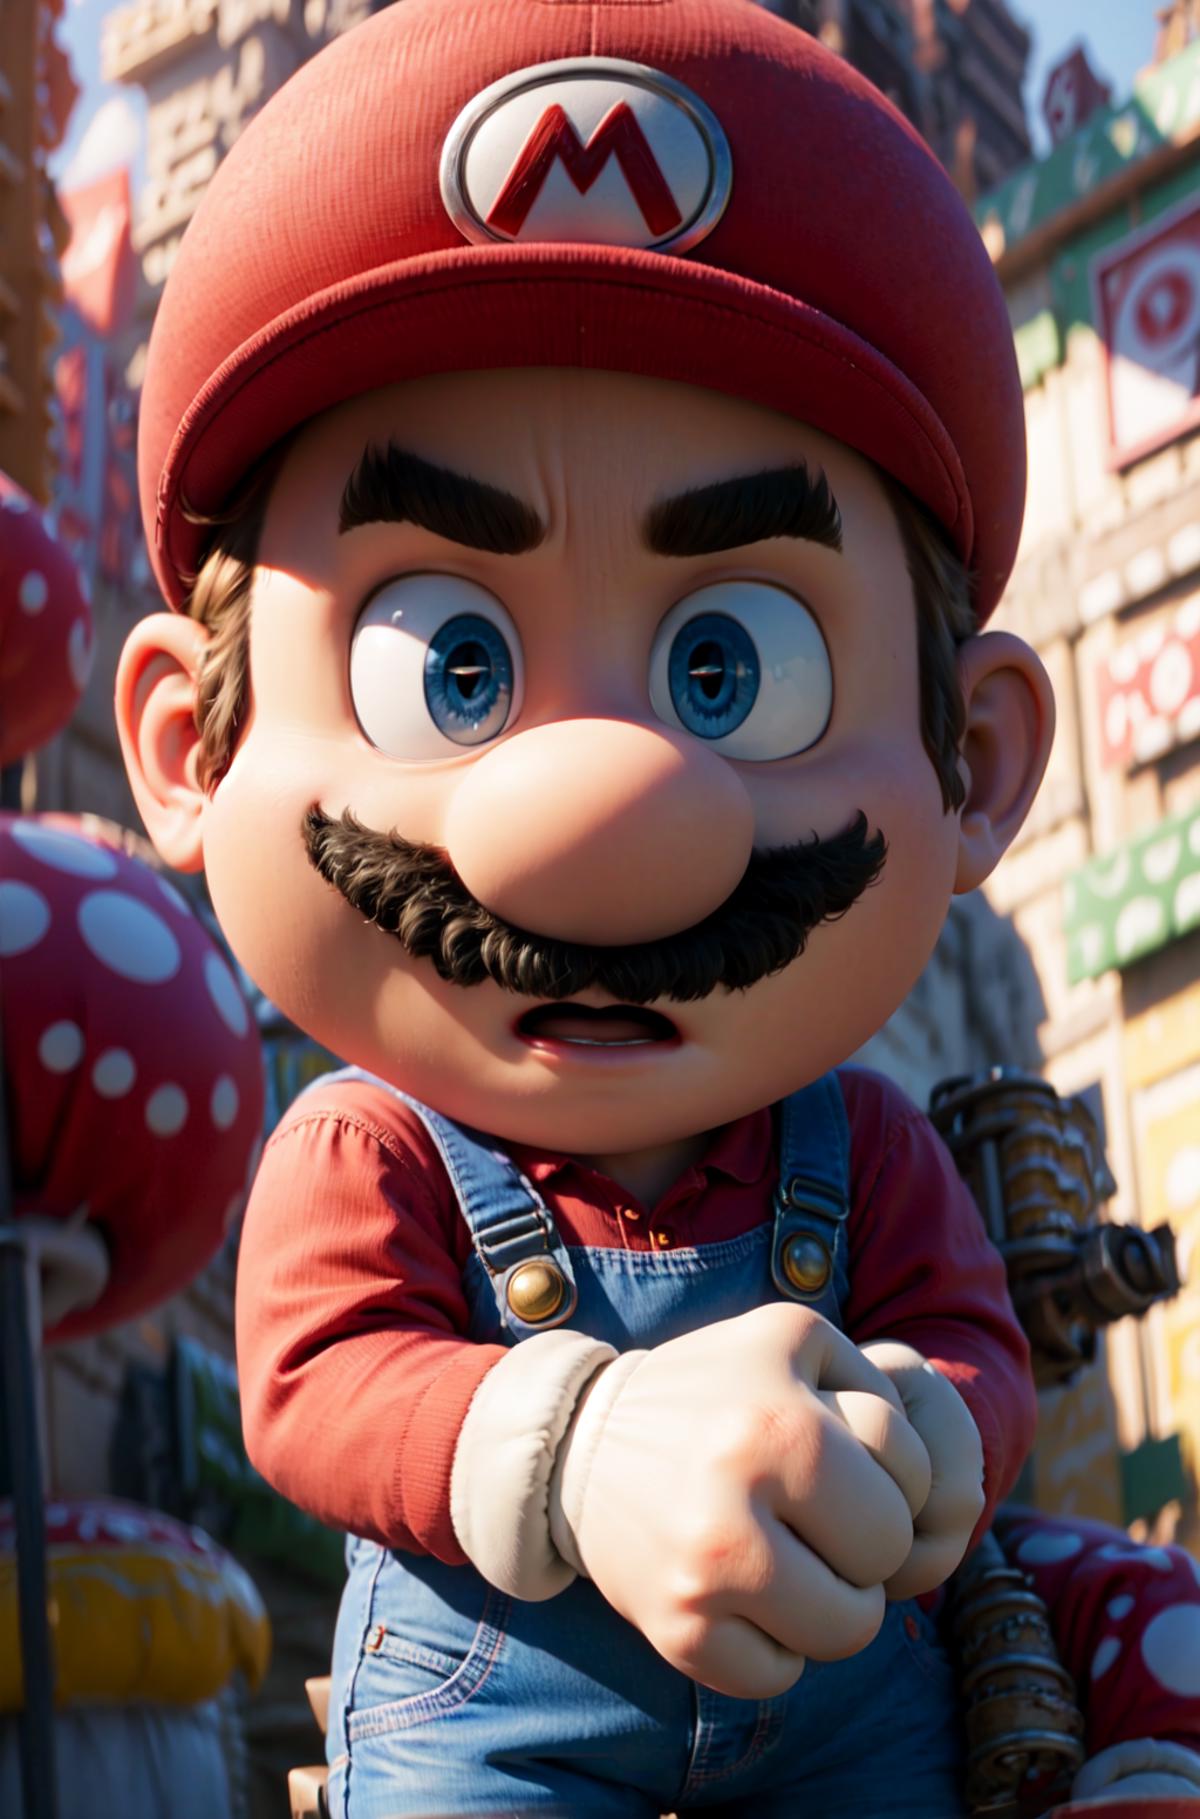 Super Mario The Movie image by LDWorksDervlex